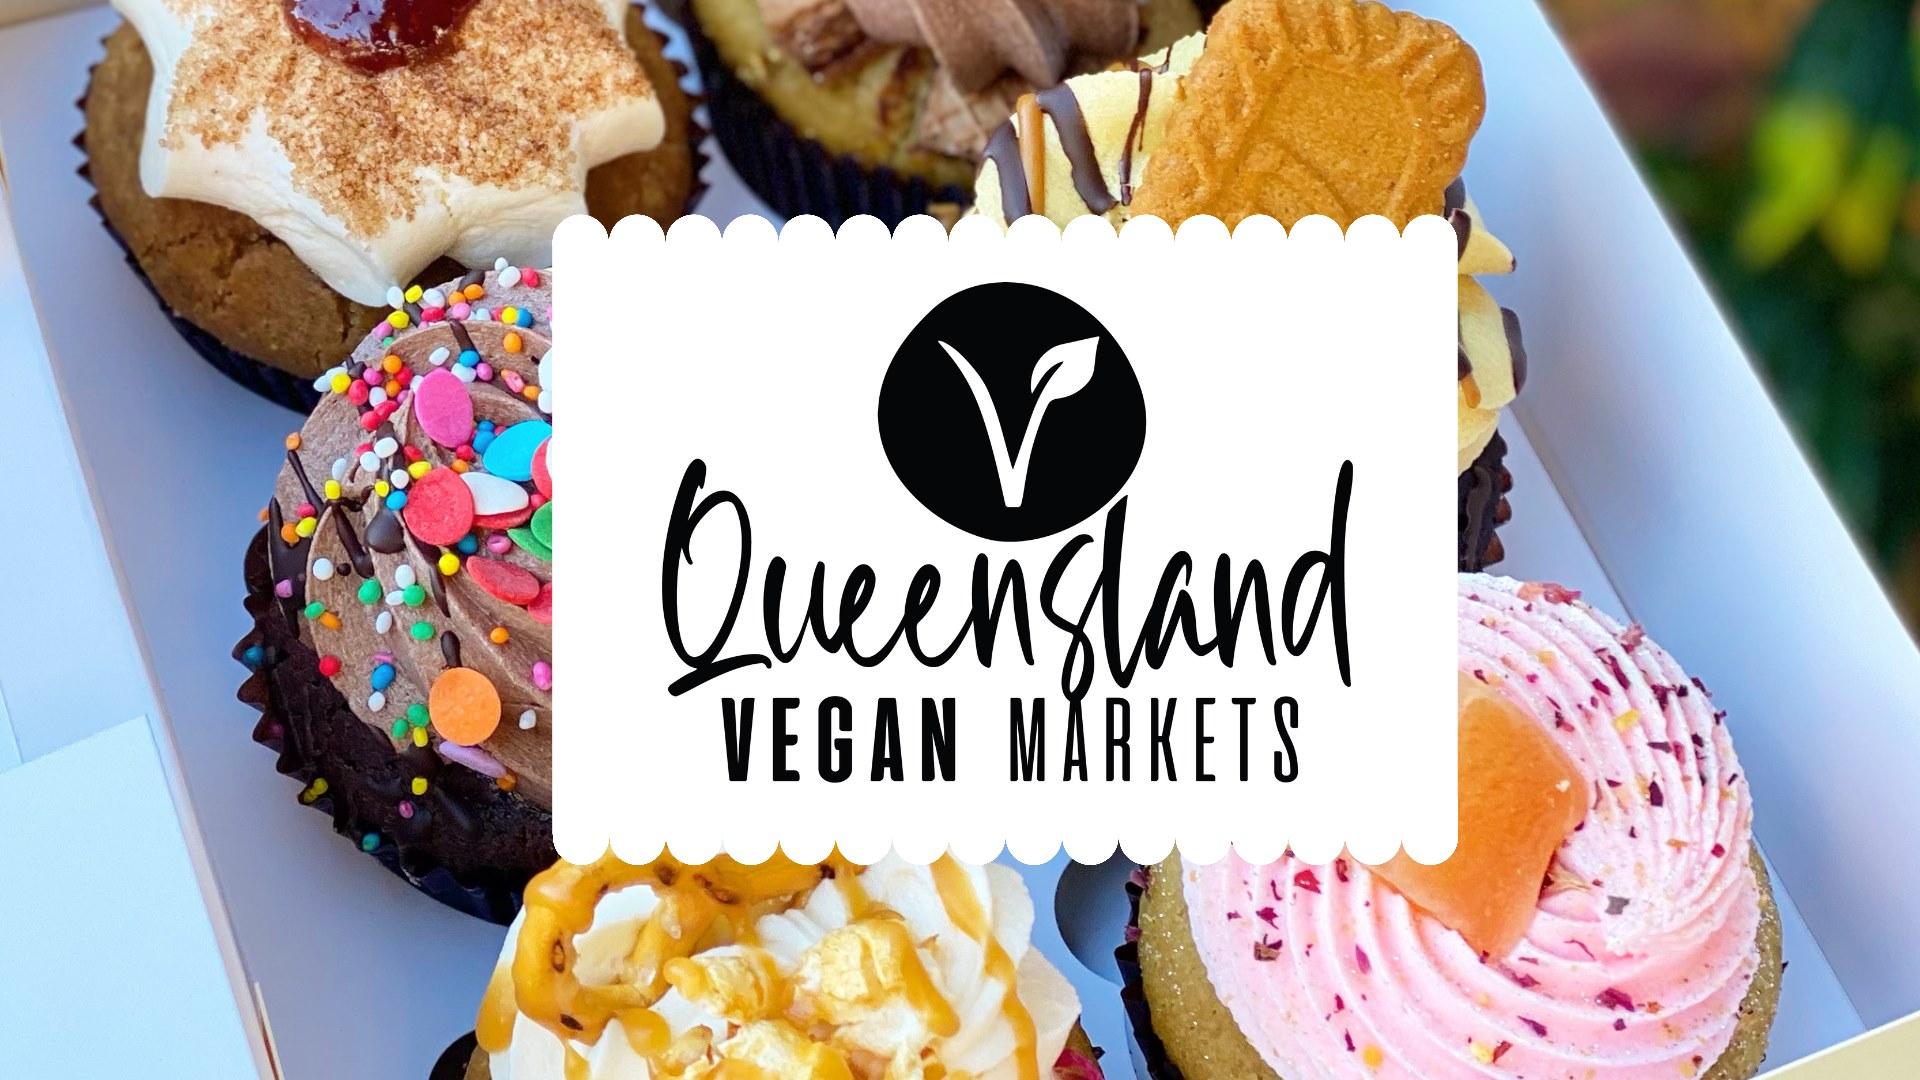 Octb Vegan Market